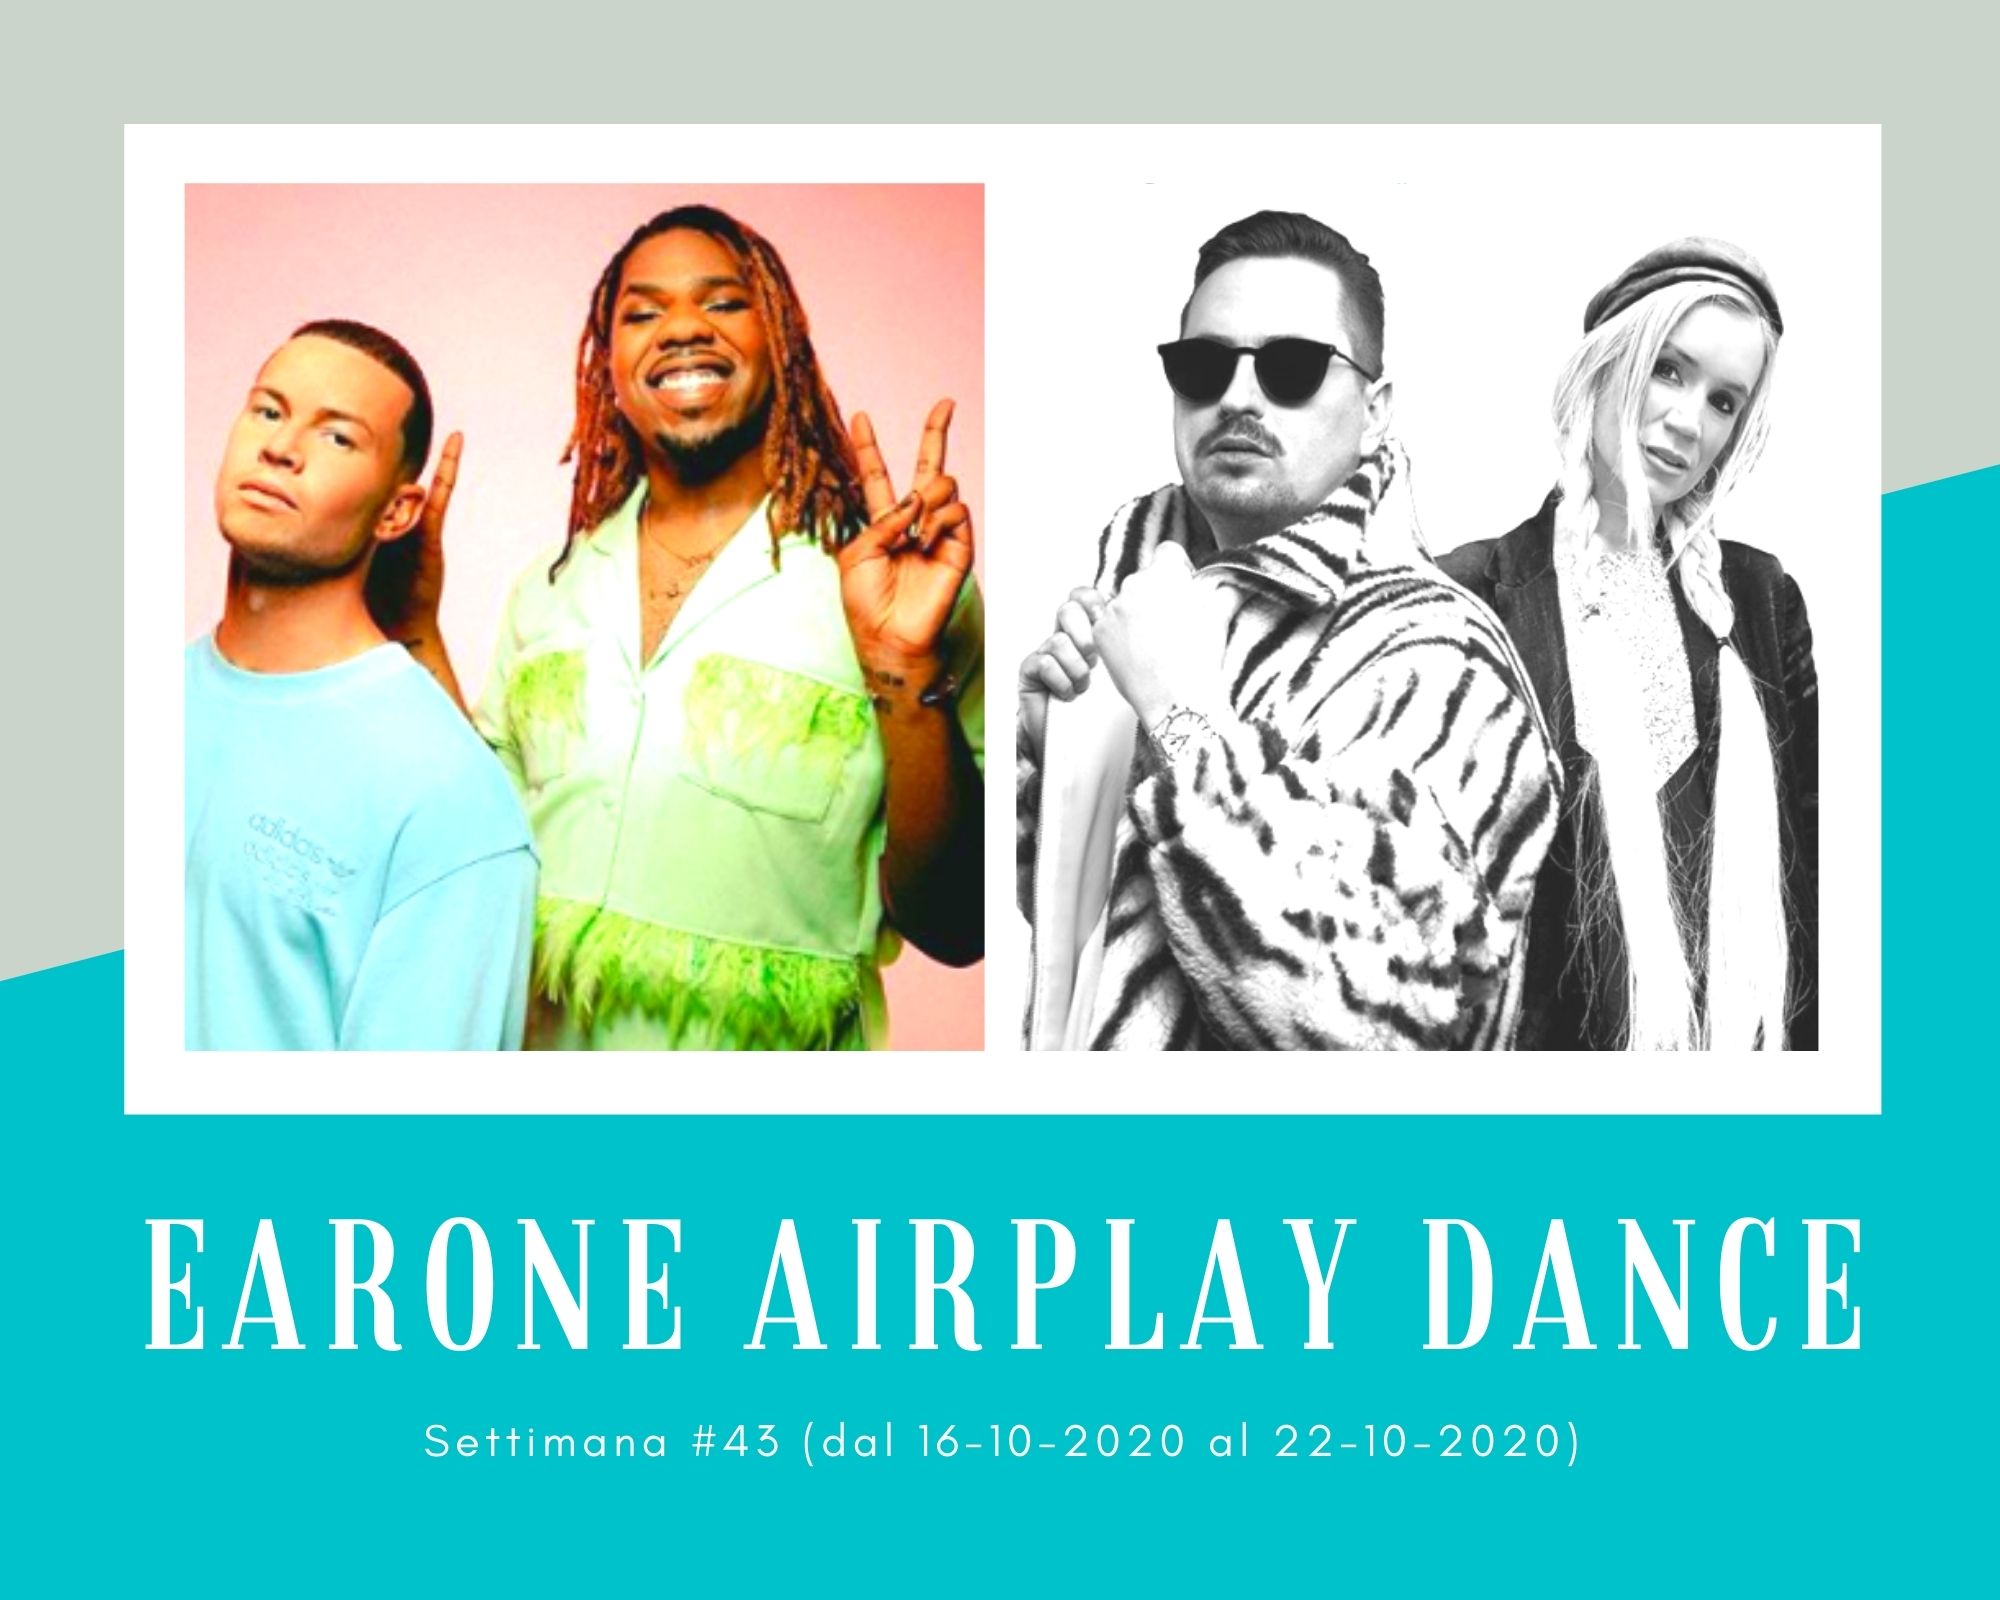 Classifica Radio EARONE Airplay Dance, week 43. Freezata in vetta l’accoppiata LGBT Joel Corry & Mnek. Robin Shultz ci prova con Kiddo